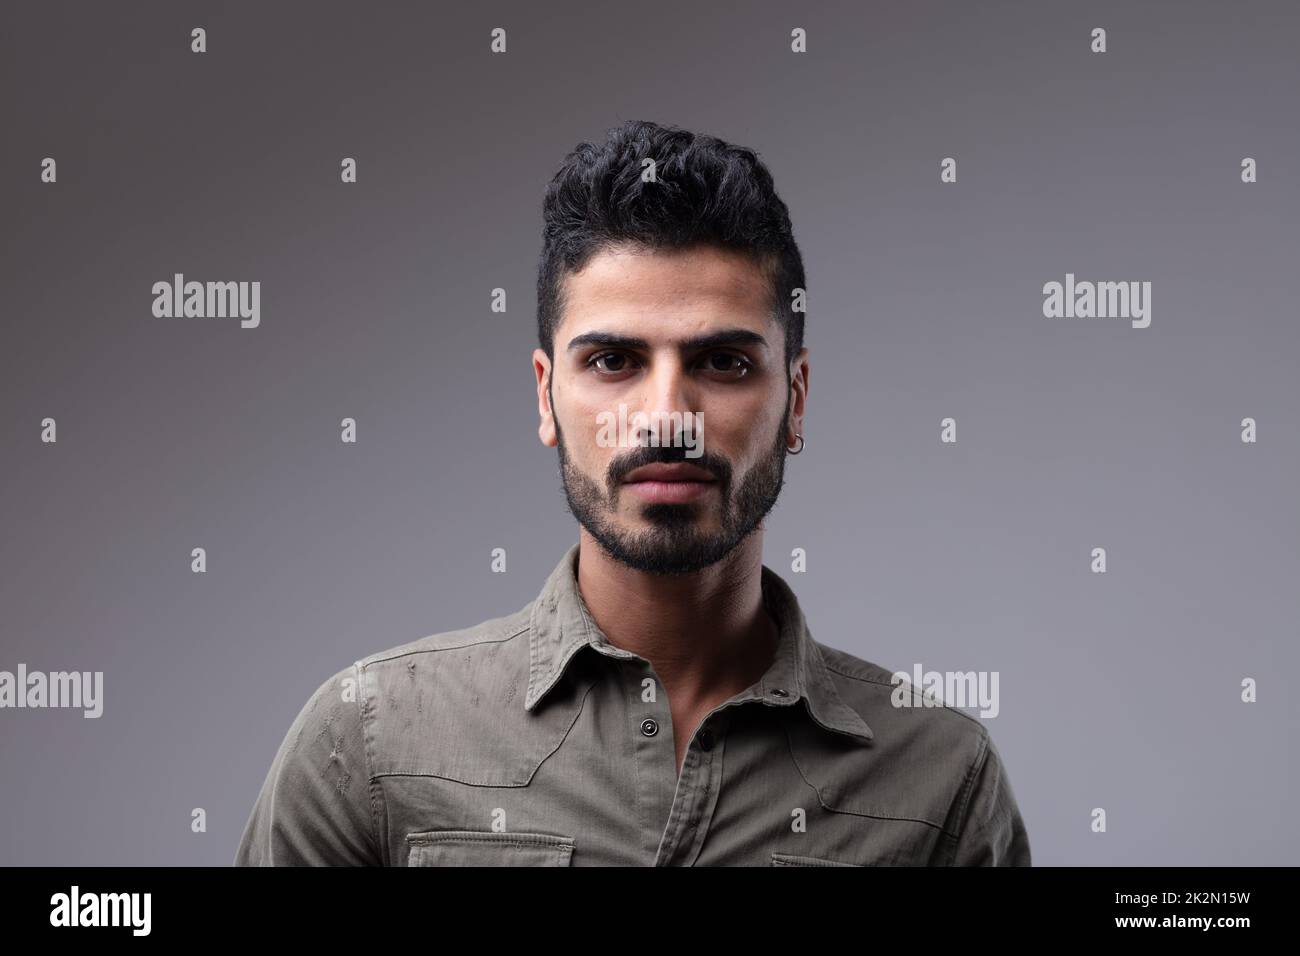 Young man with beard wearing grey button shirt Stock Photo